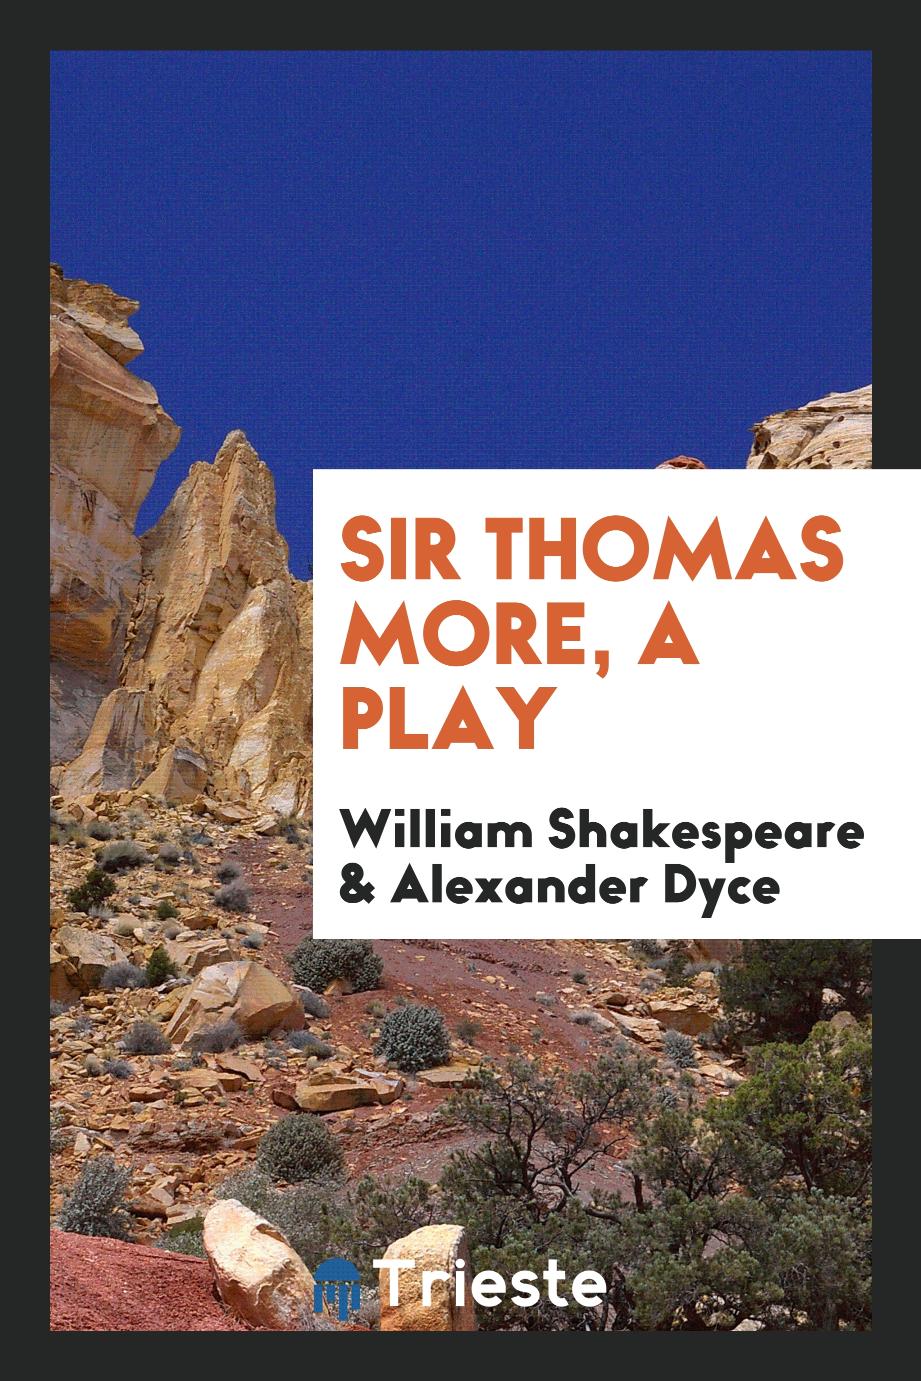 Sir Thomas More, a Play